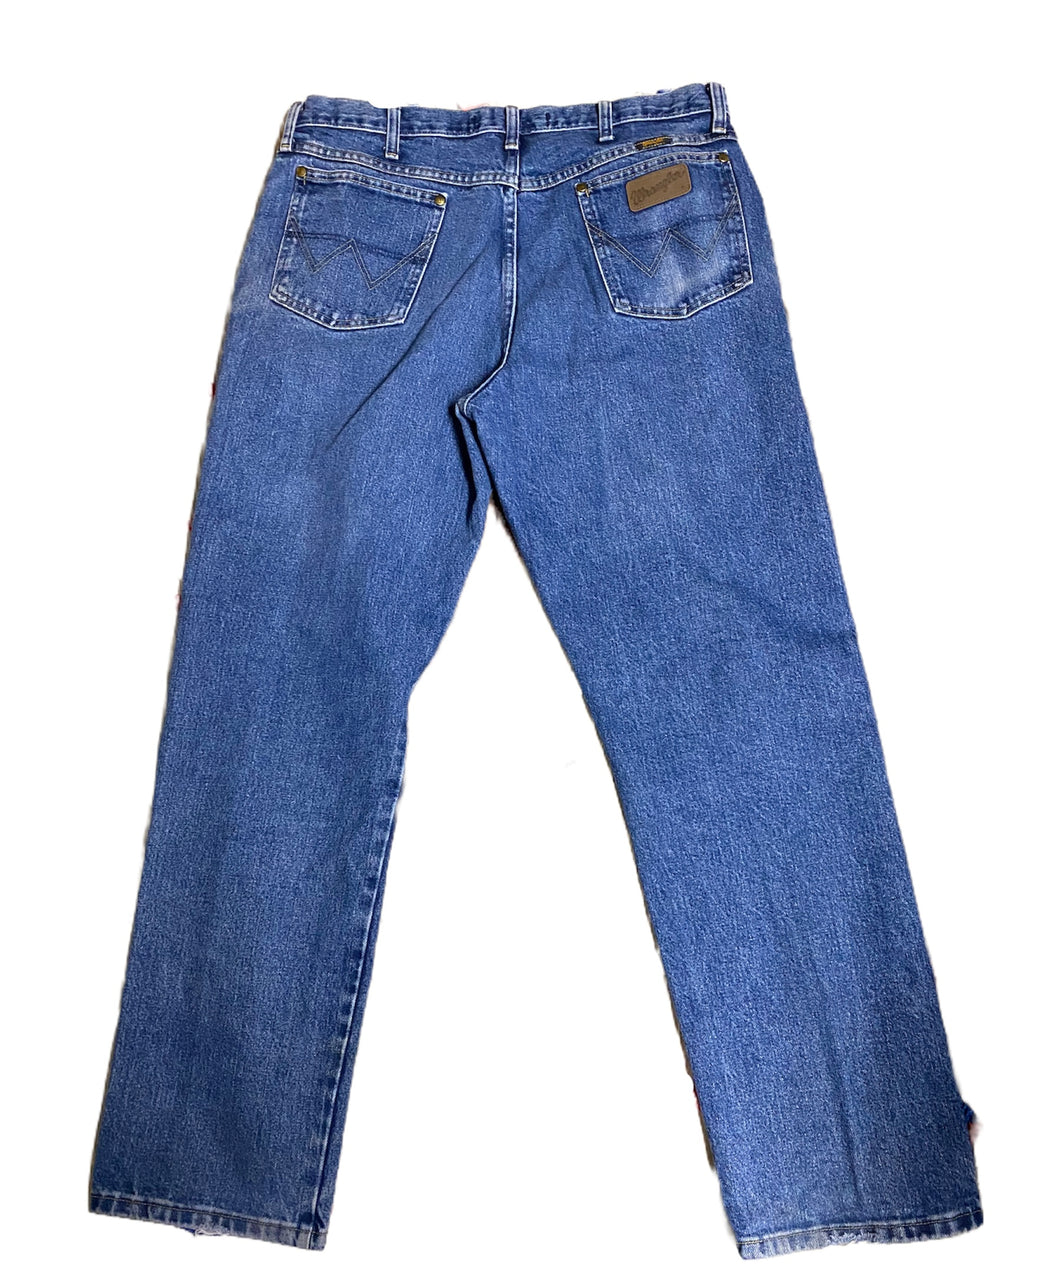 George Strait wrangler men’s jeans Sz 36X32